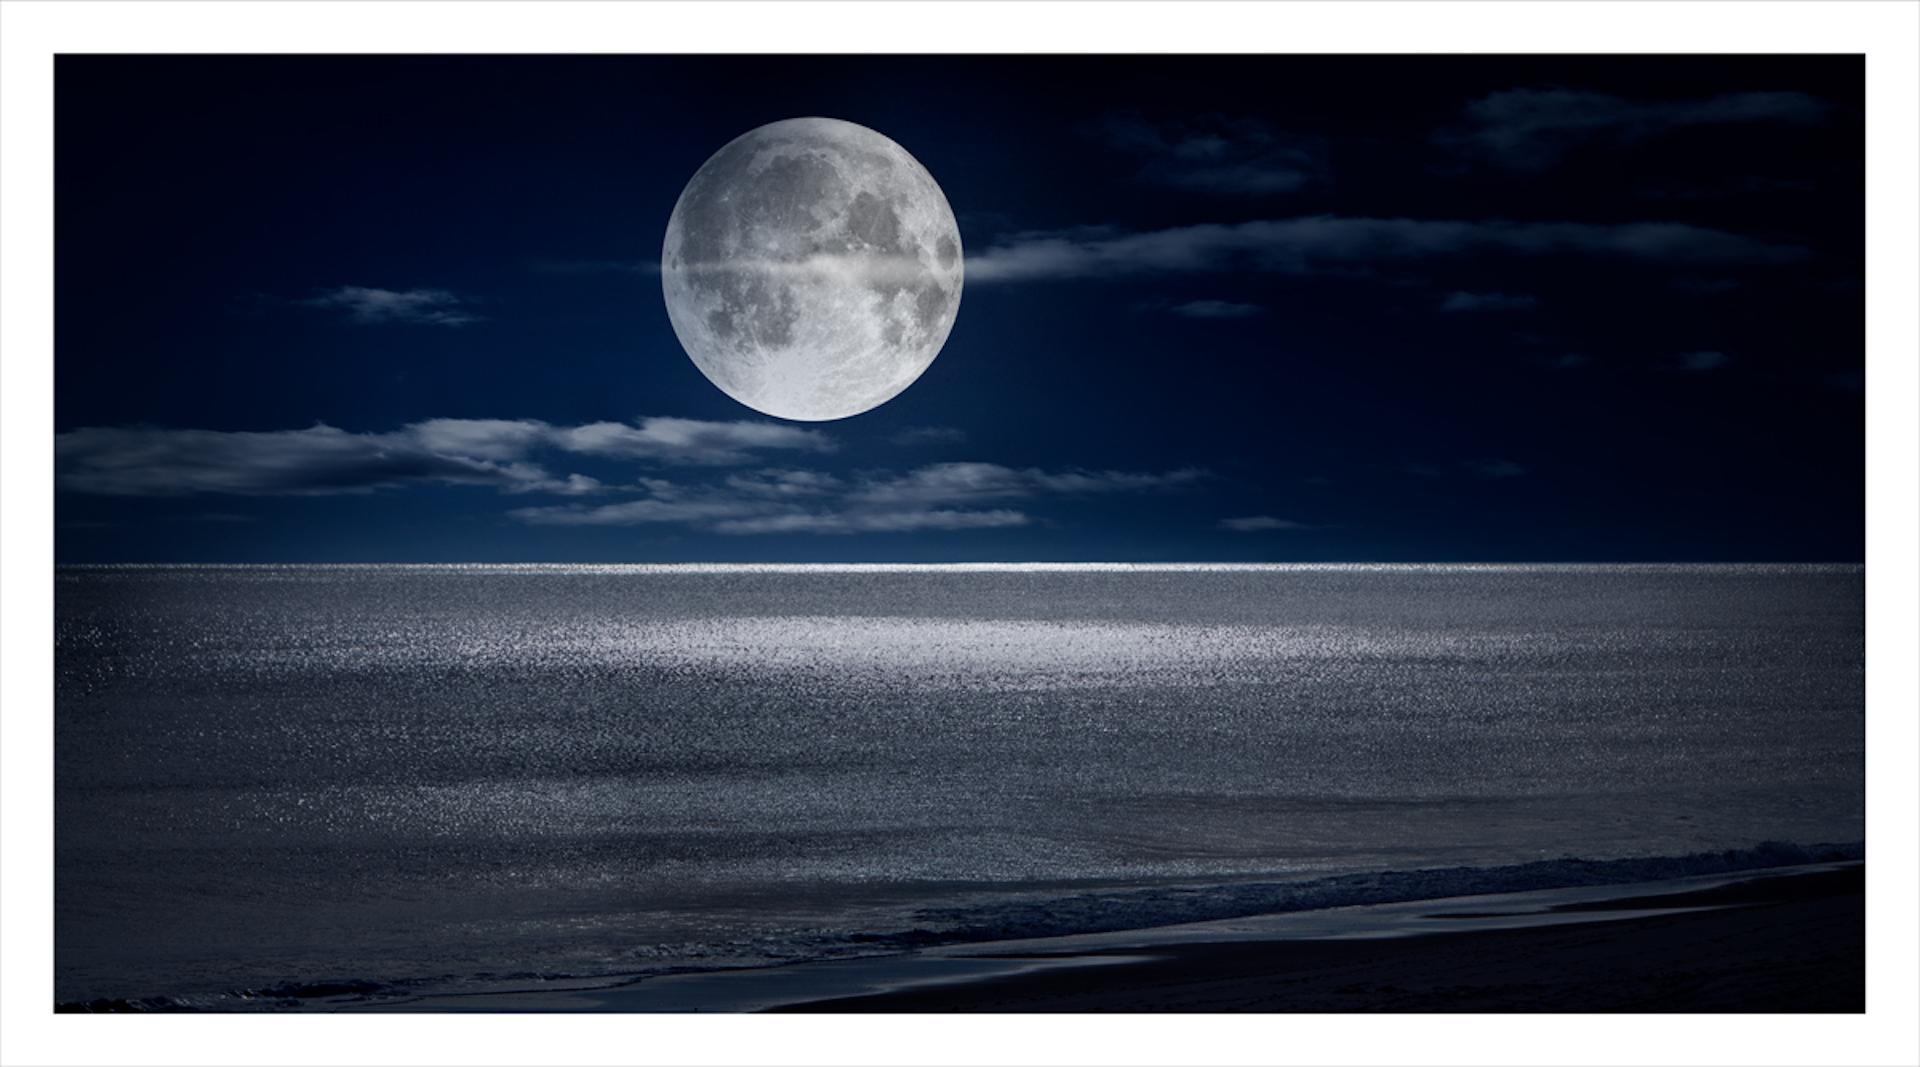 Moon #22 - Photograph by Bob Tabor